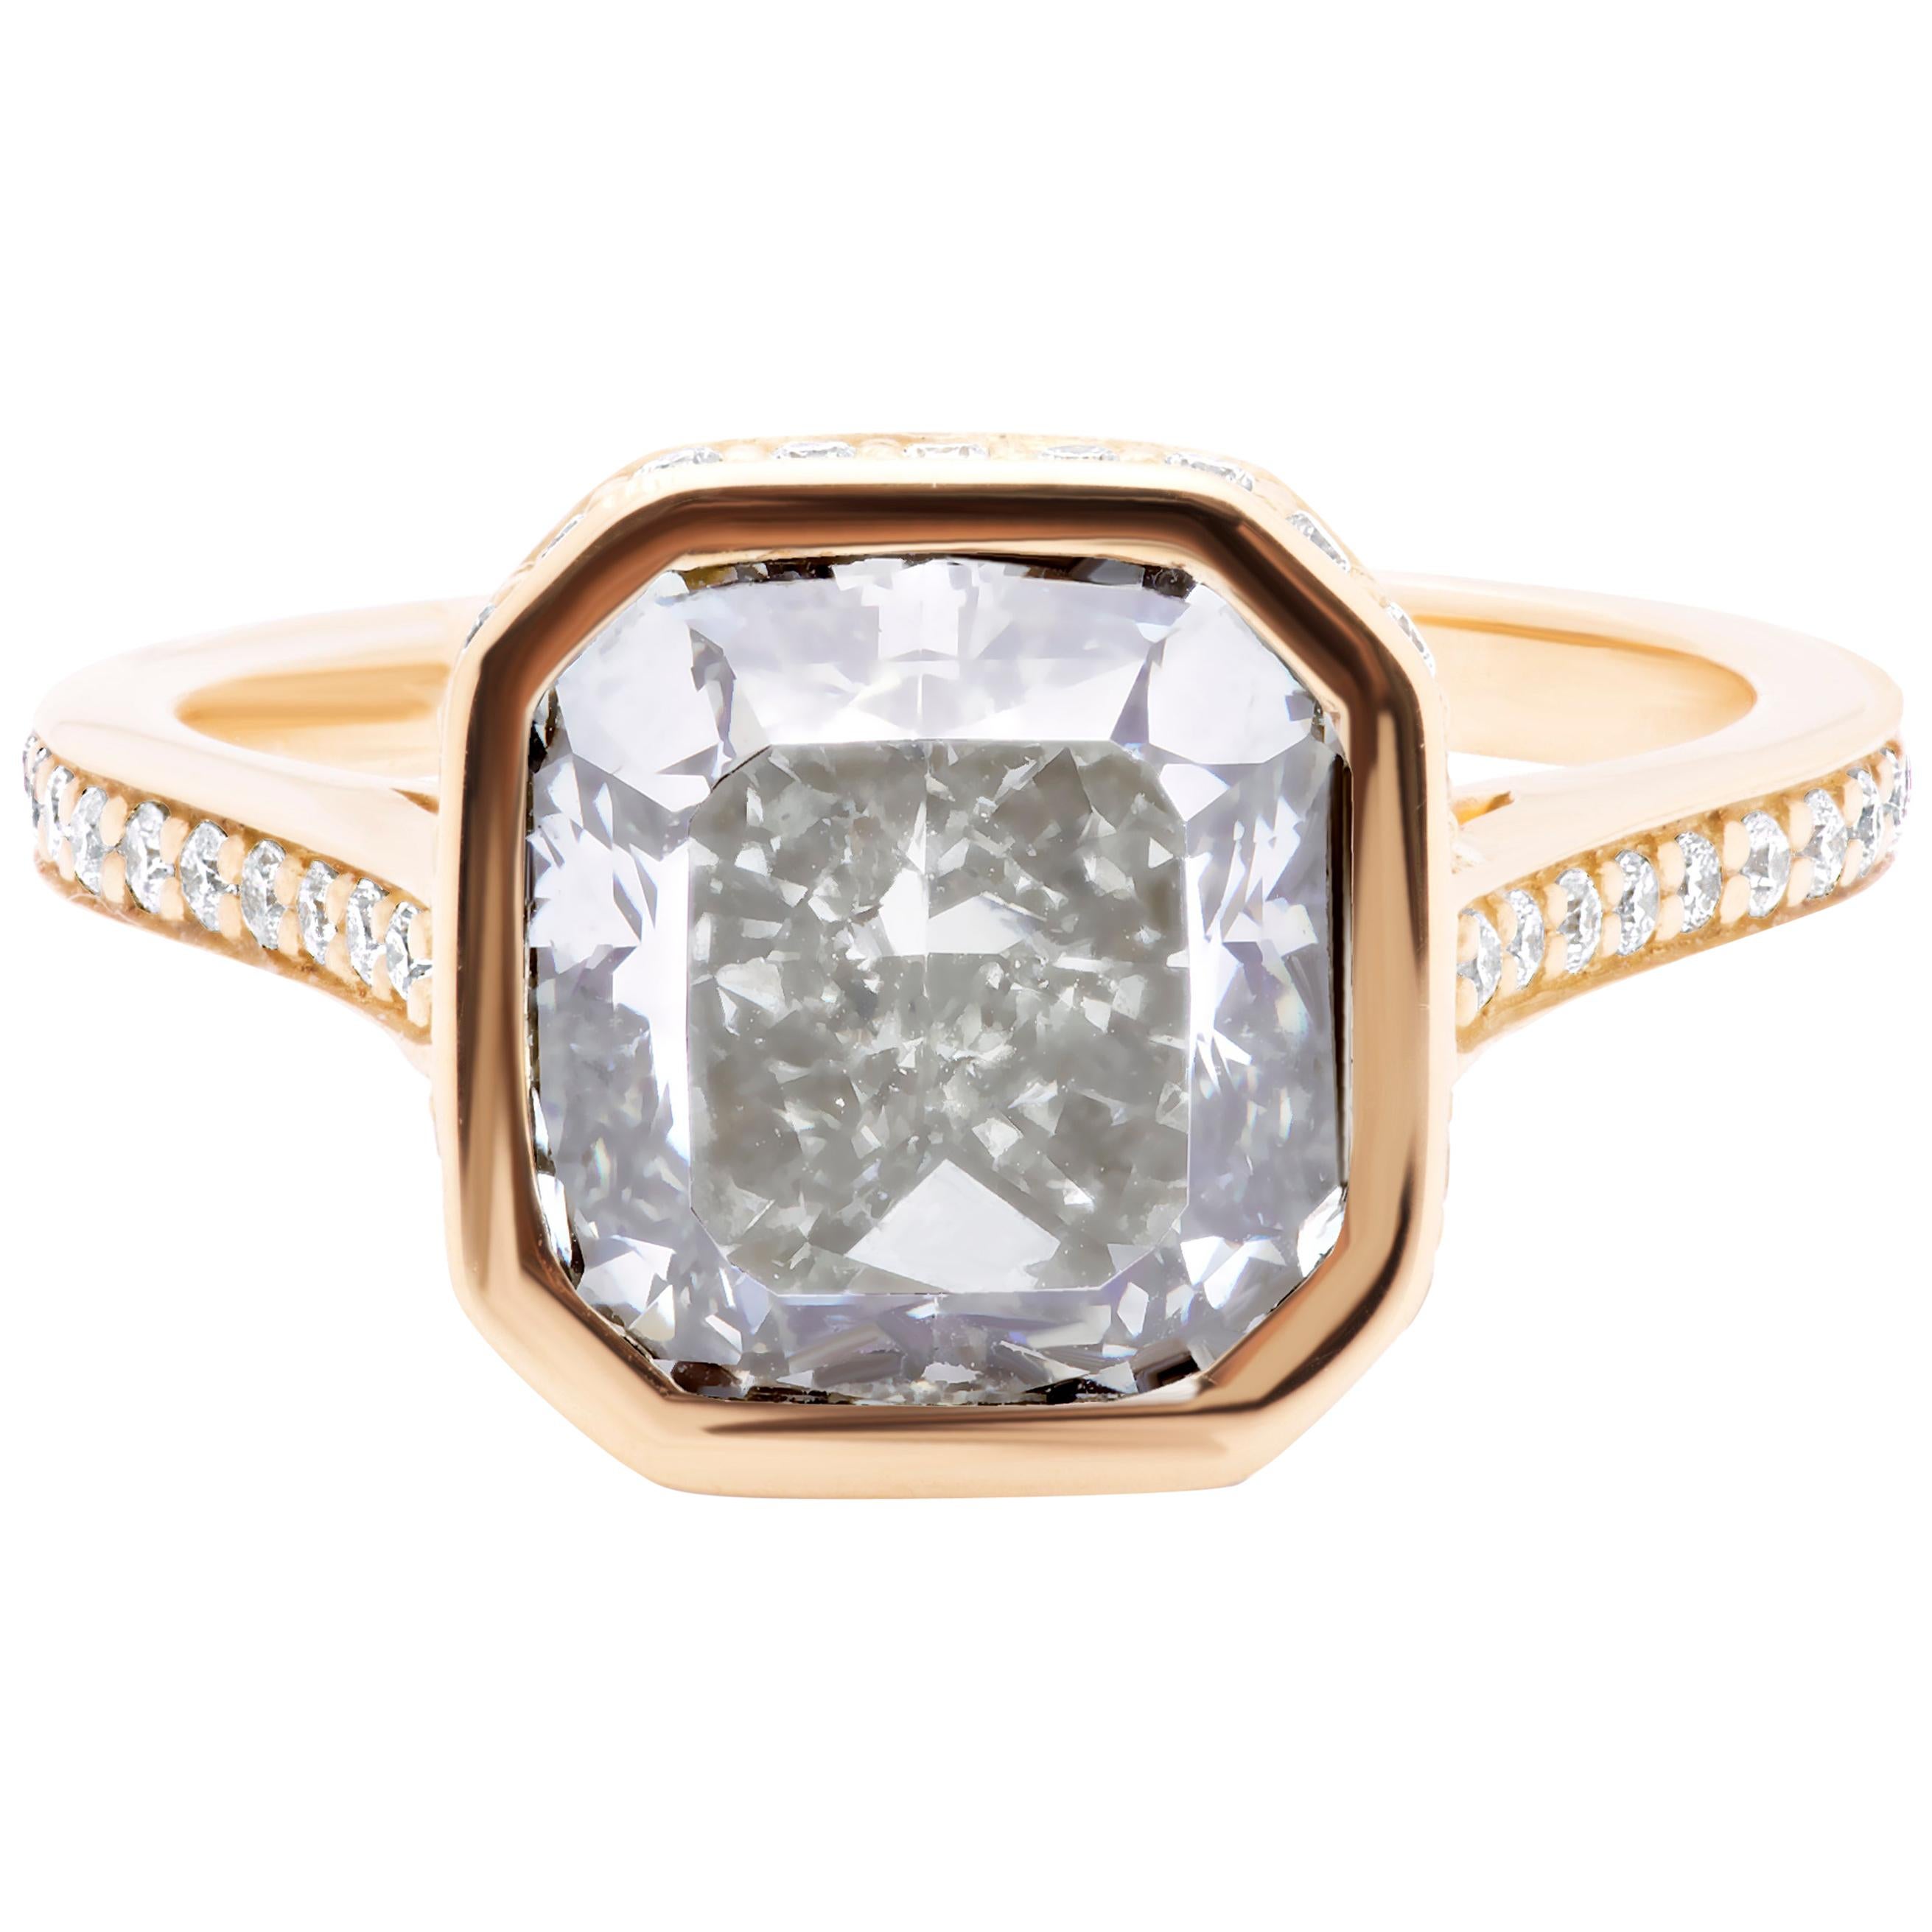 4.55 Carat Very Light Gray Radiant Cut Diamond 18K Yellow Gold Engagement Ring